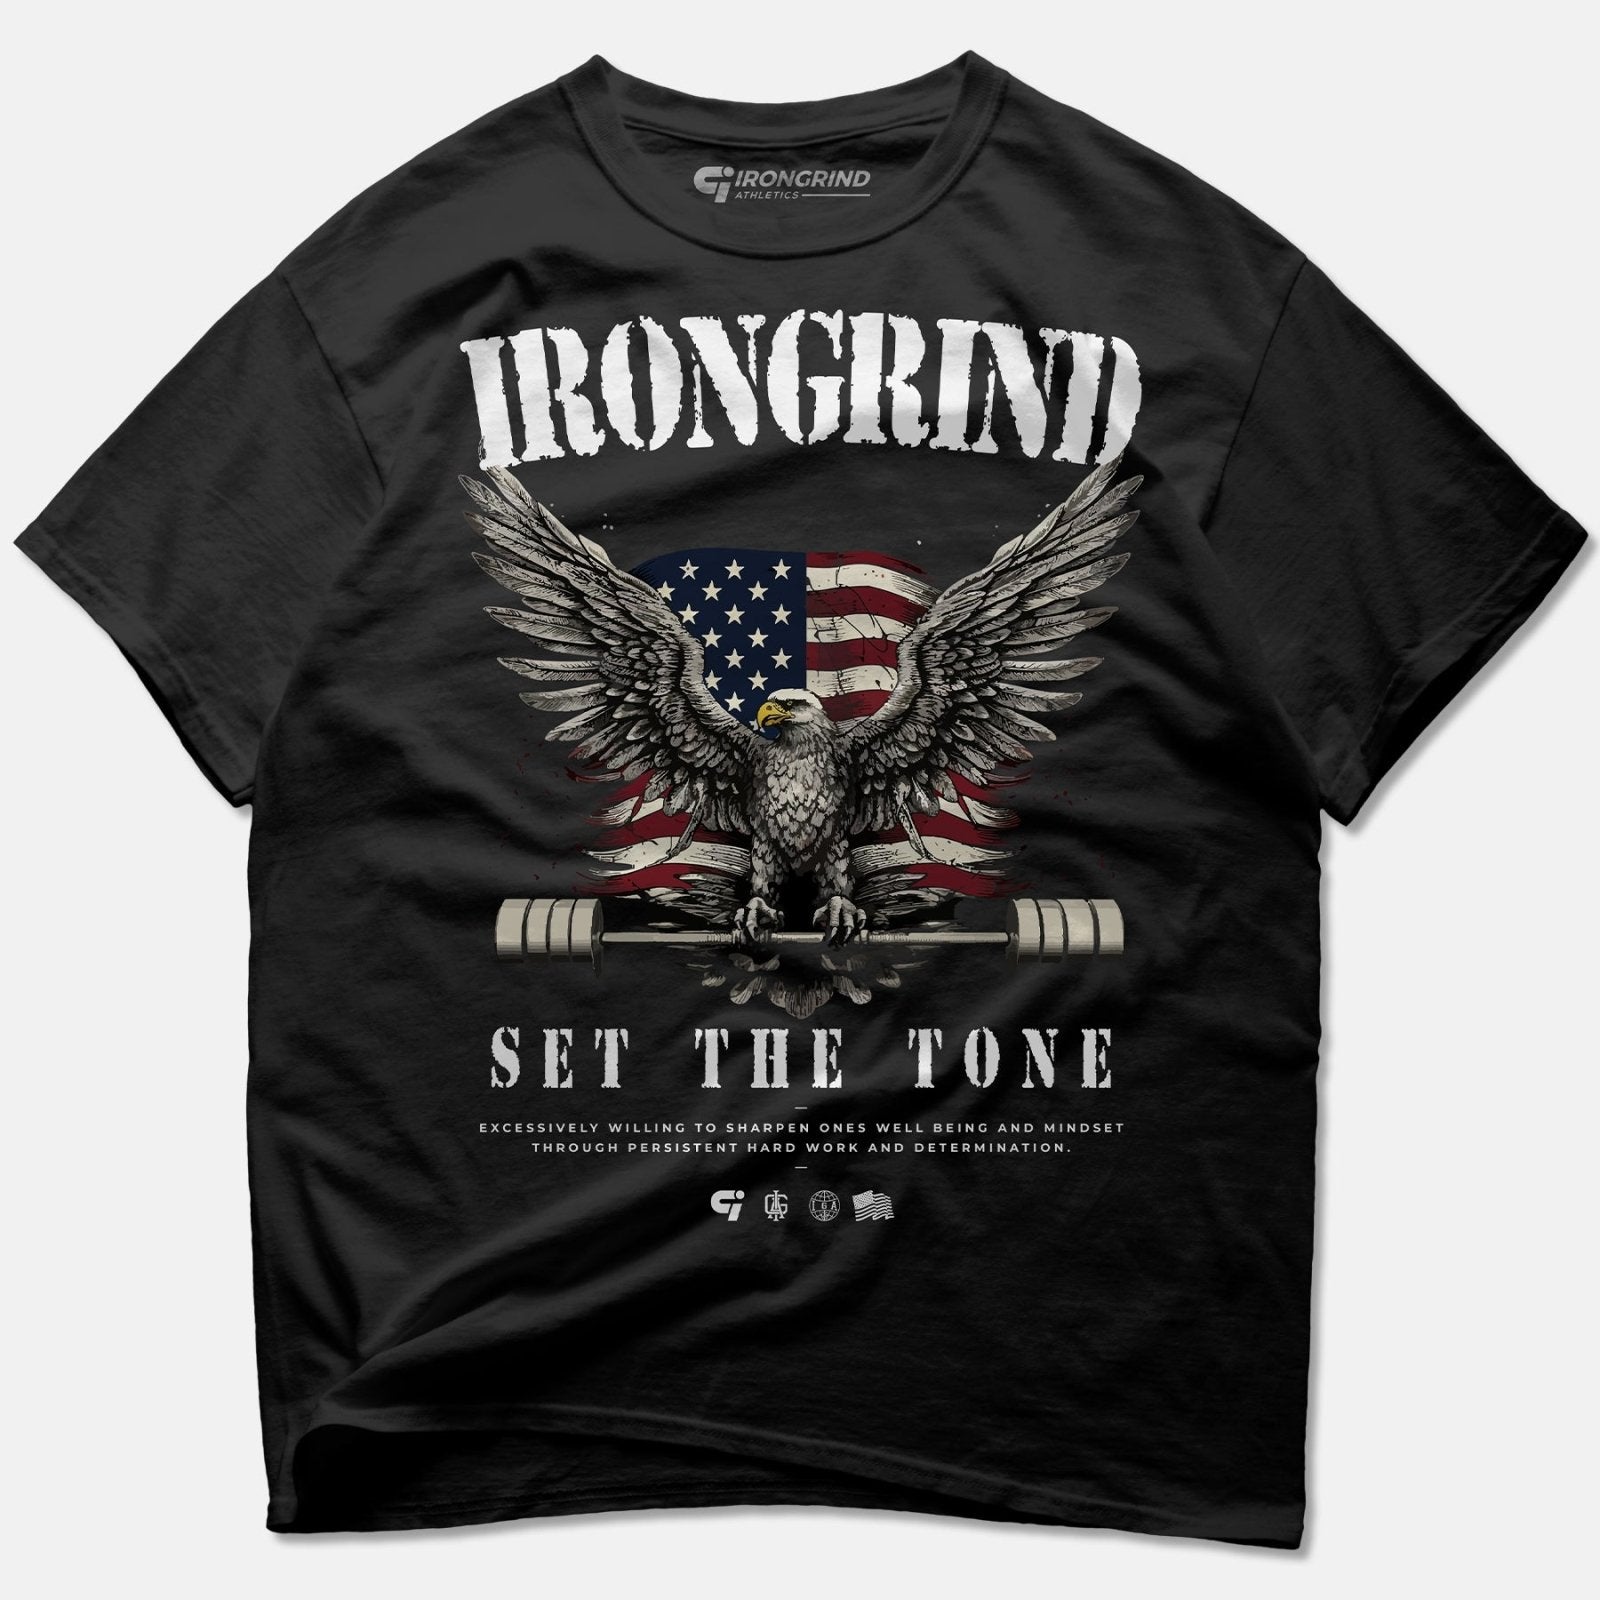 Freedom 'Army' T-Shirt - IronGrind Athletics - activewear - gymshark - alphalete